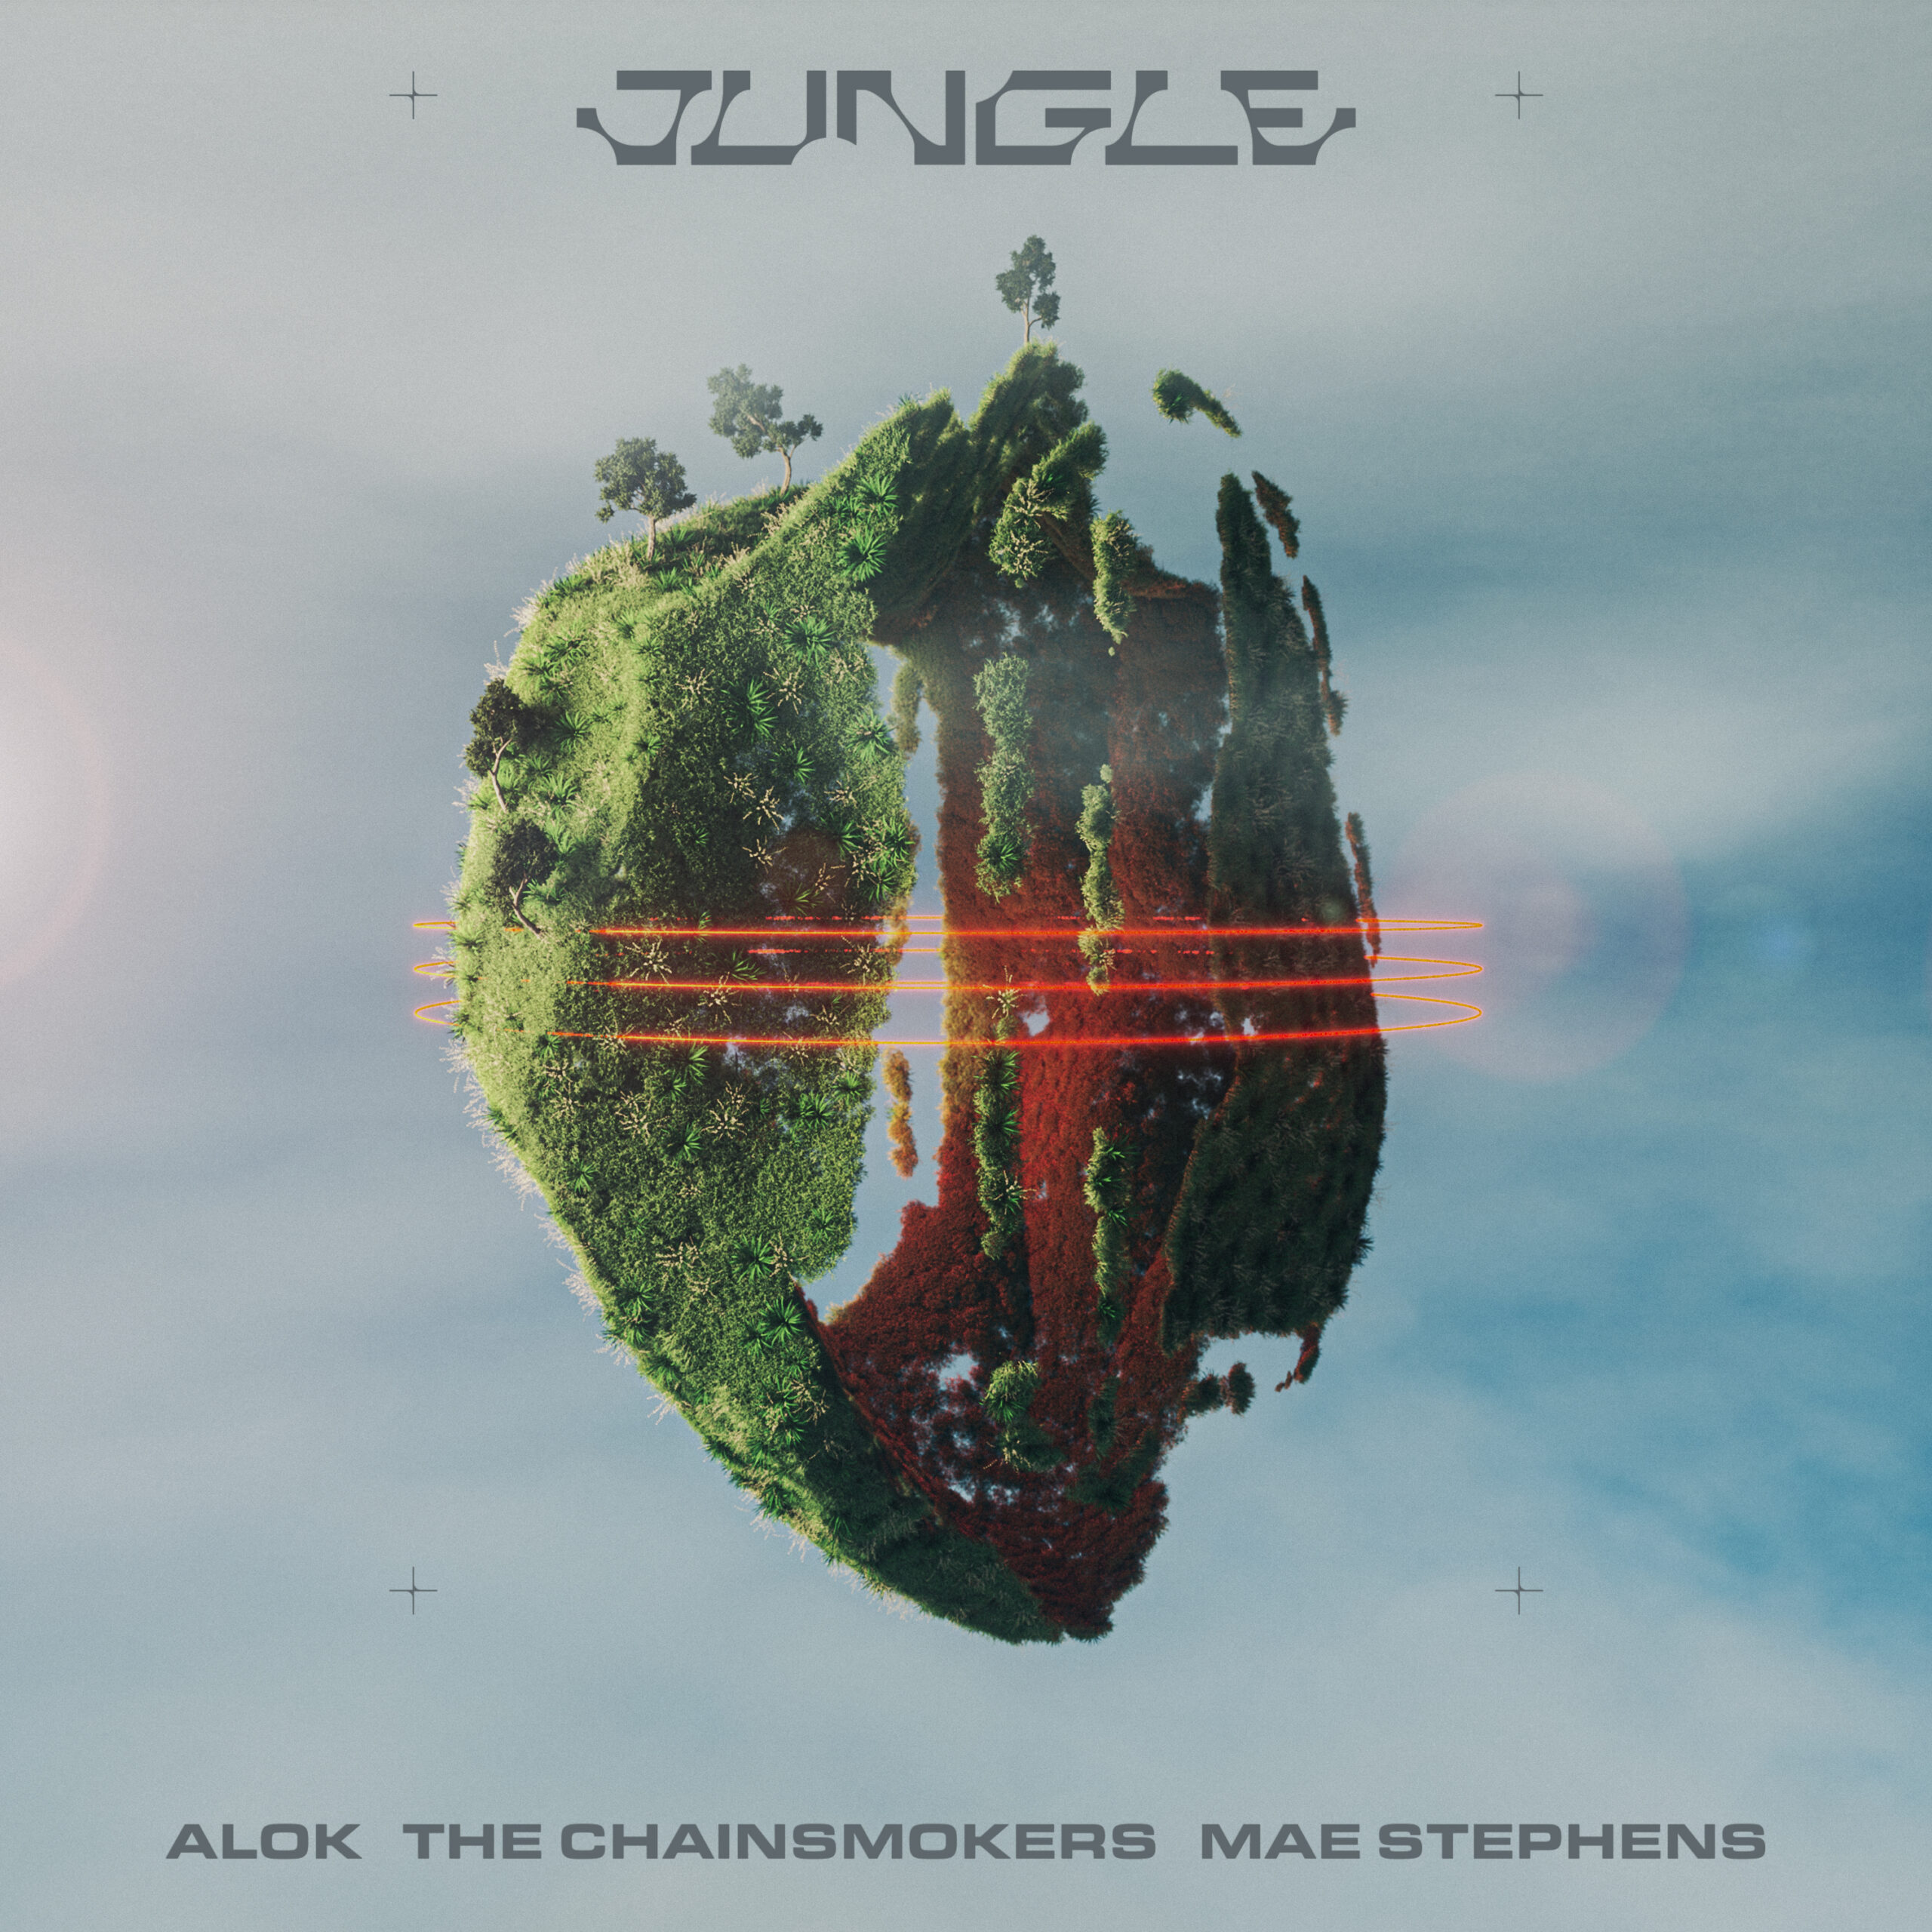 Alok, Chainsmokers, & Mae Stephens Team Up On “Jungle”